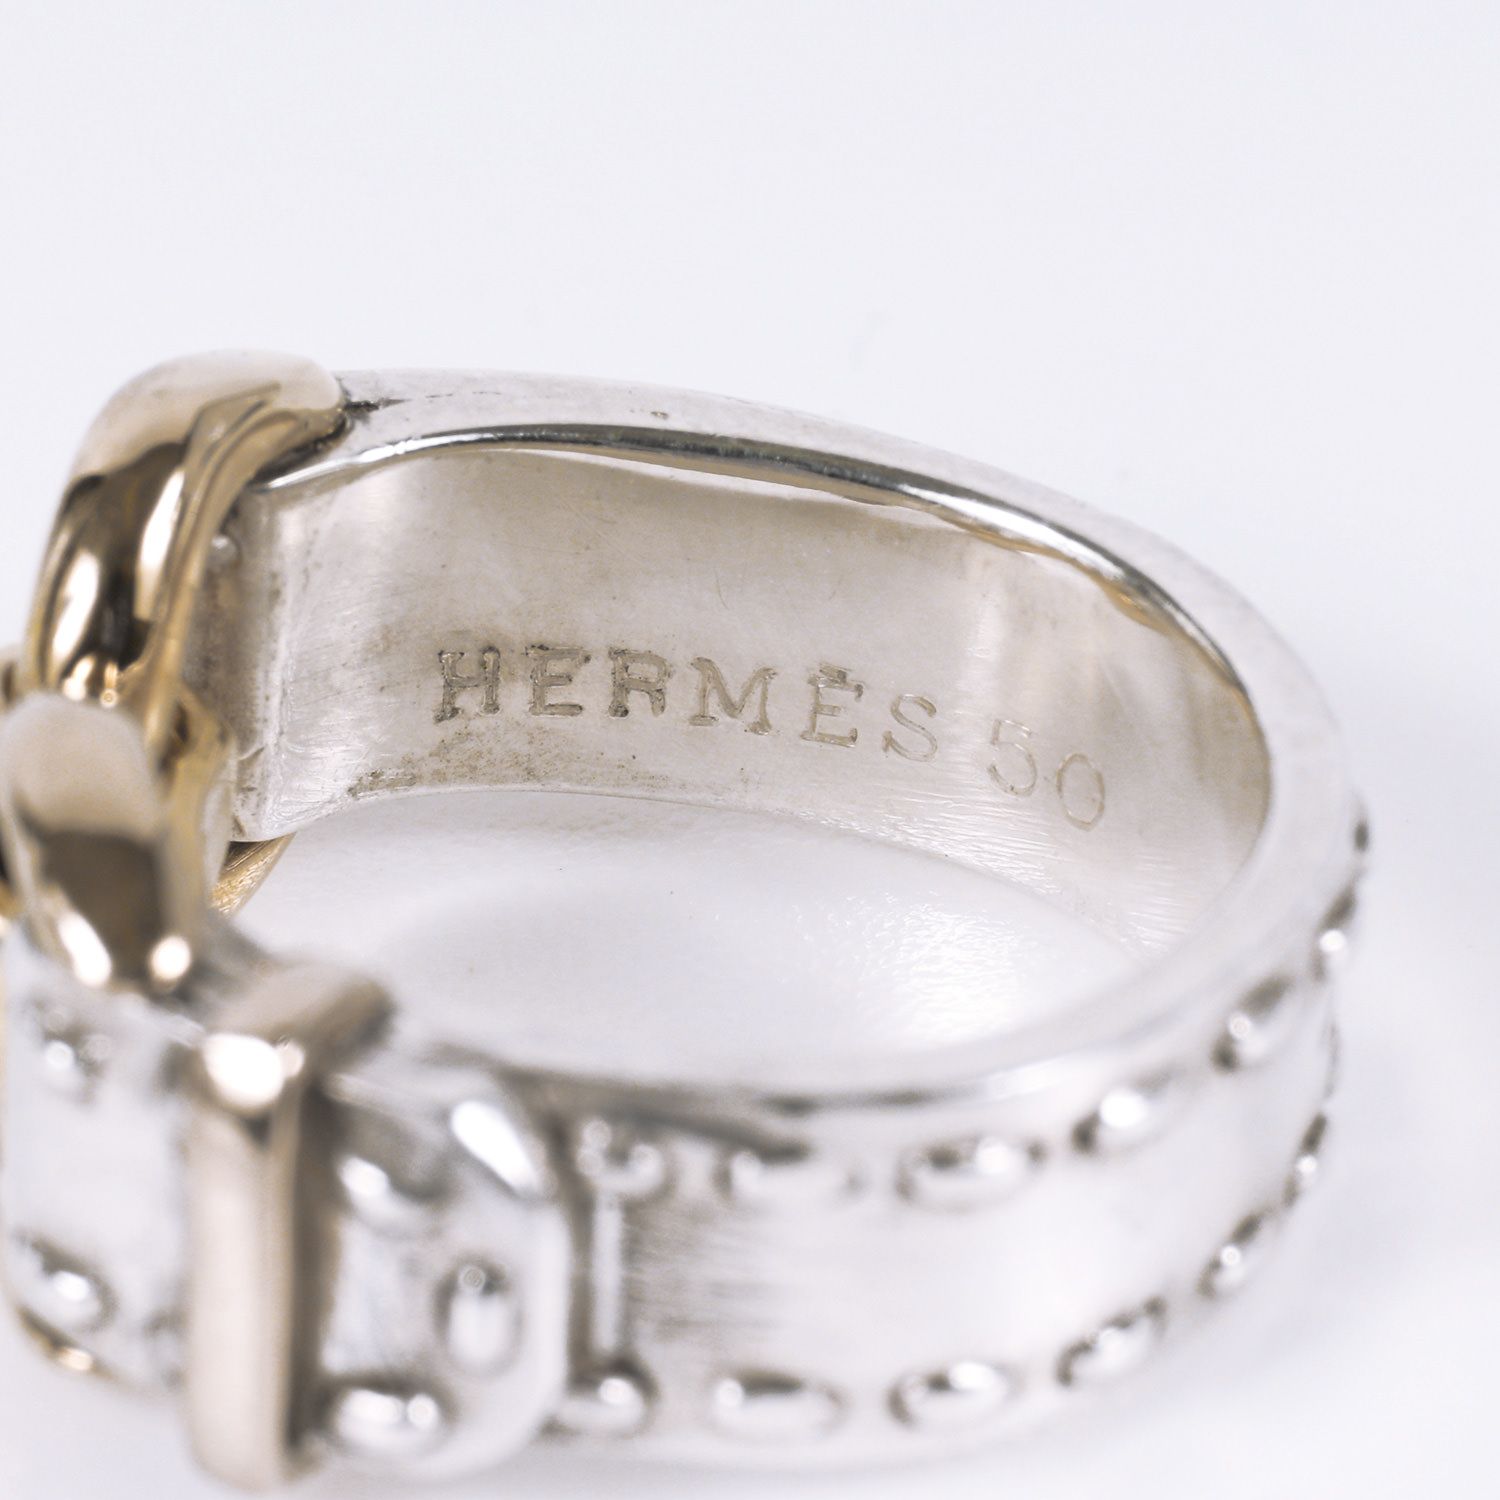 HERMES エルメス サンチュール コンビ リング 指輪 アクセサリー 925